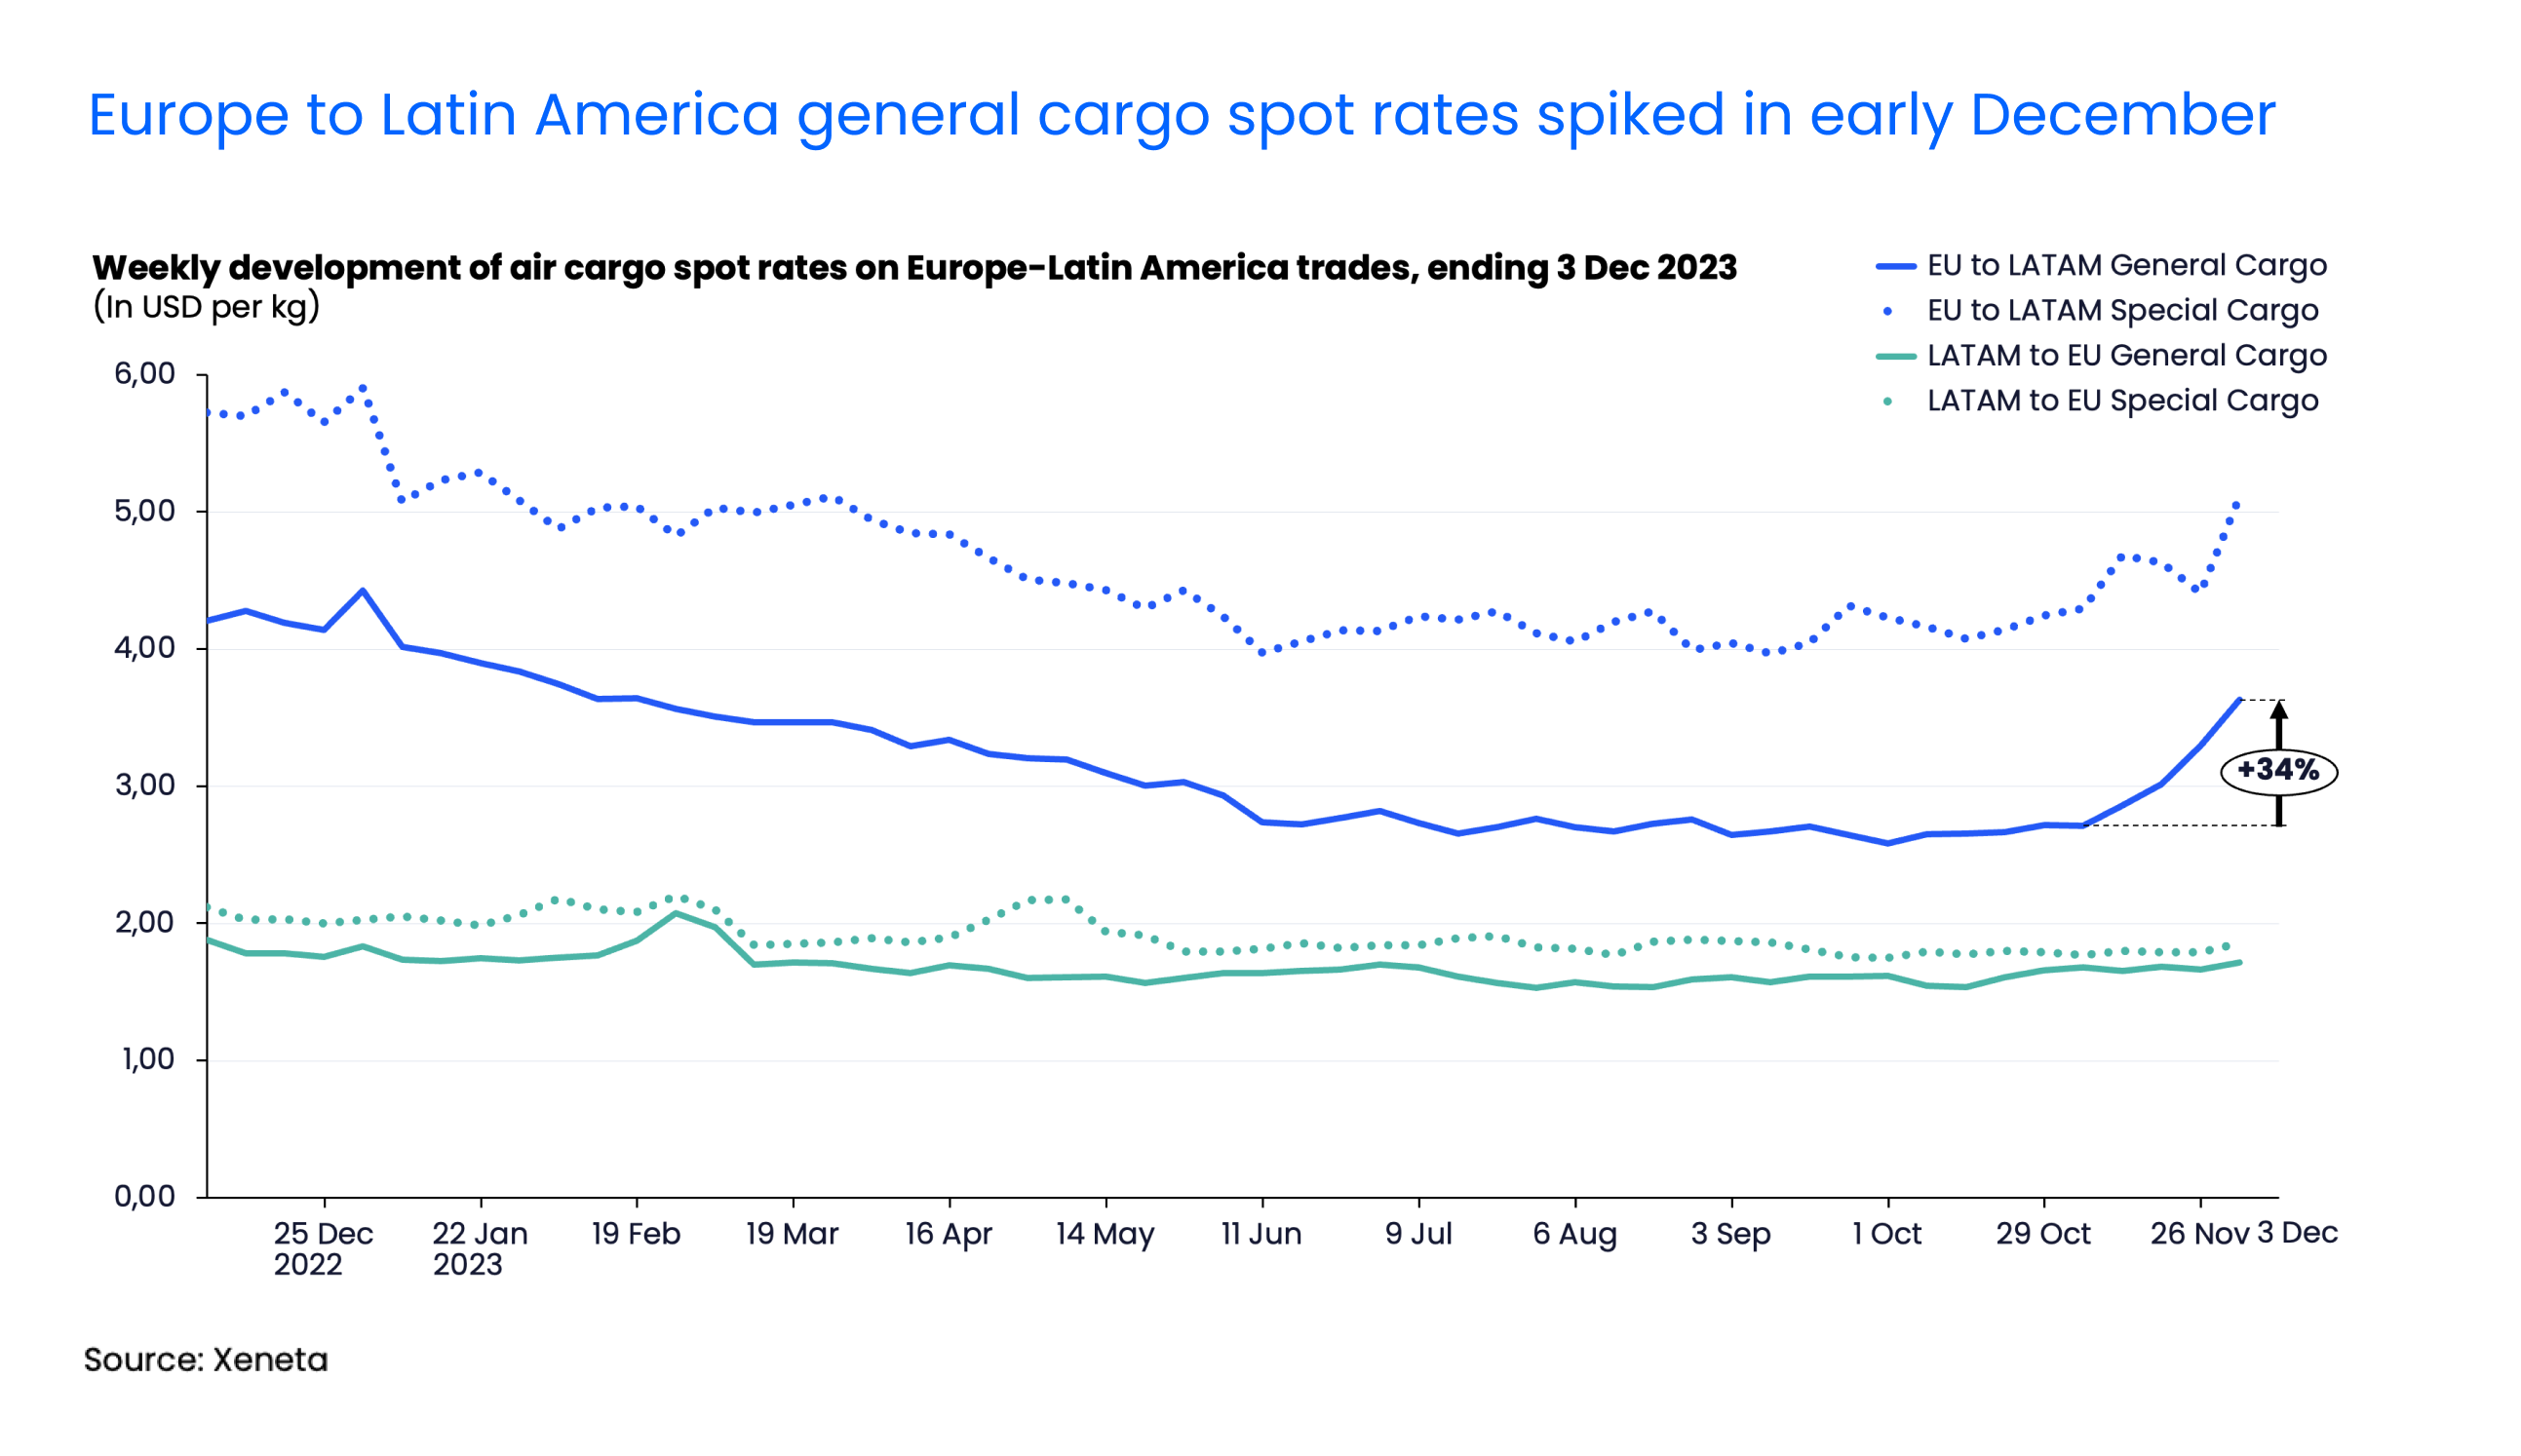 Europe to Latin America General Cargo Spot Rates